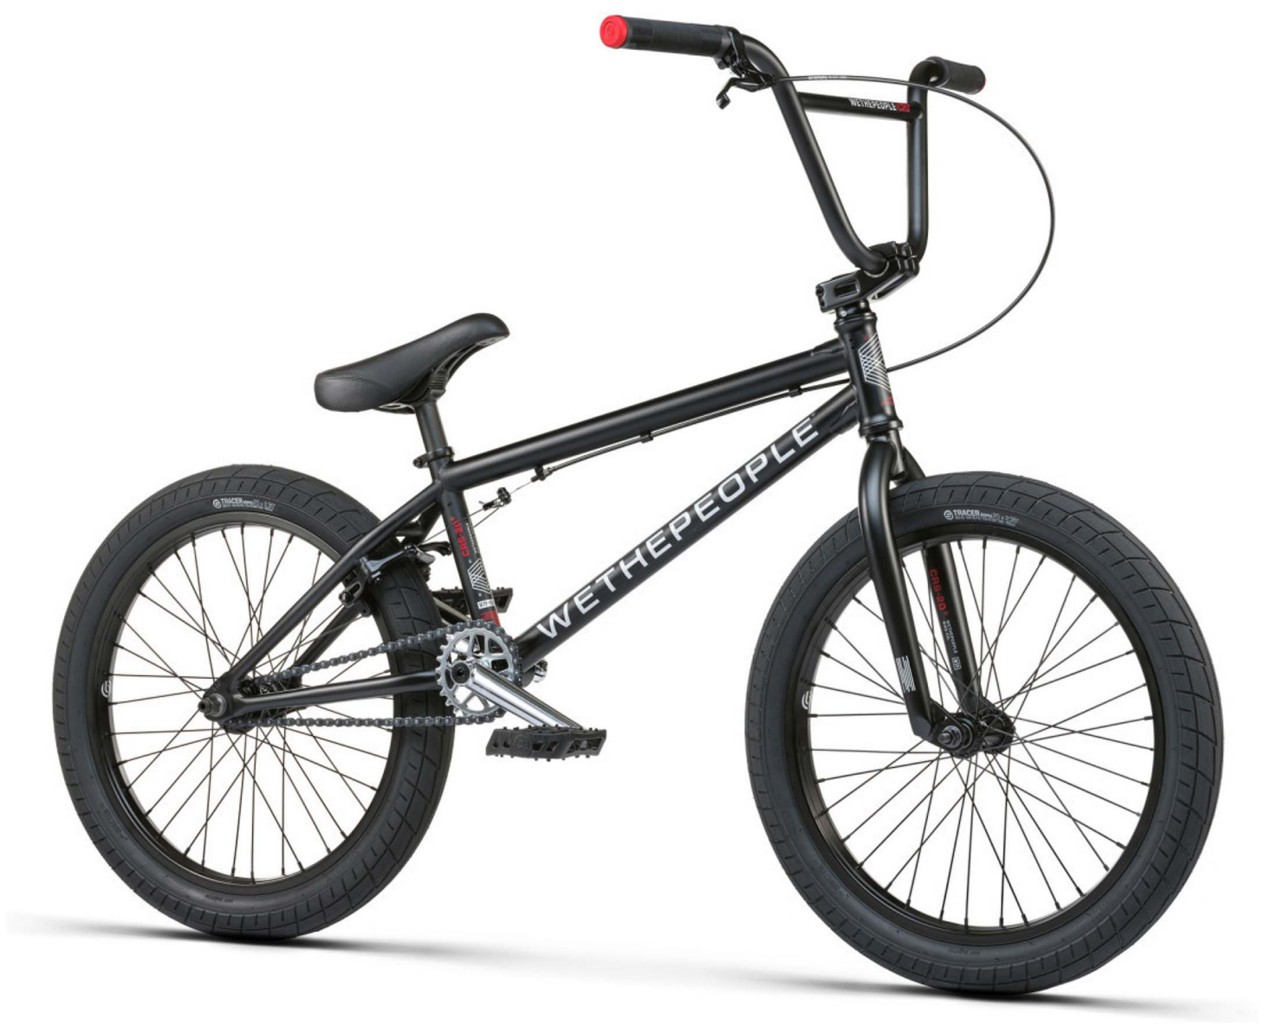 Wethepeople CRS 20 inch with Freecoaster - BMX Bike 2021 | matt black